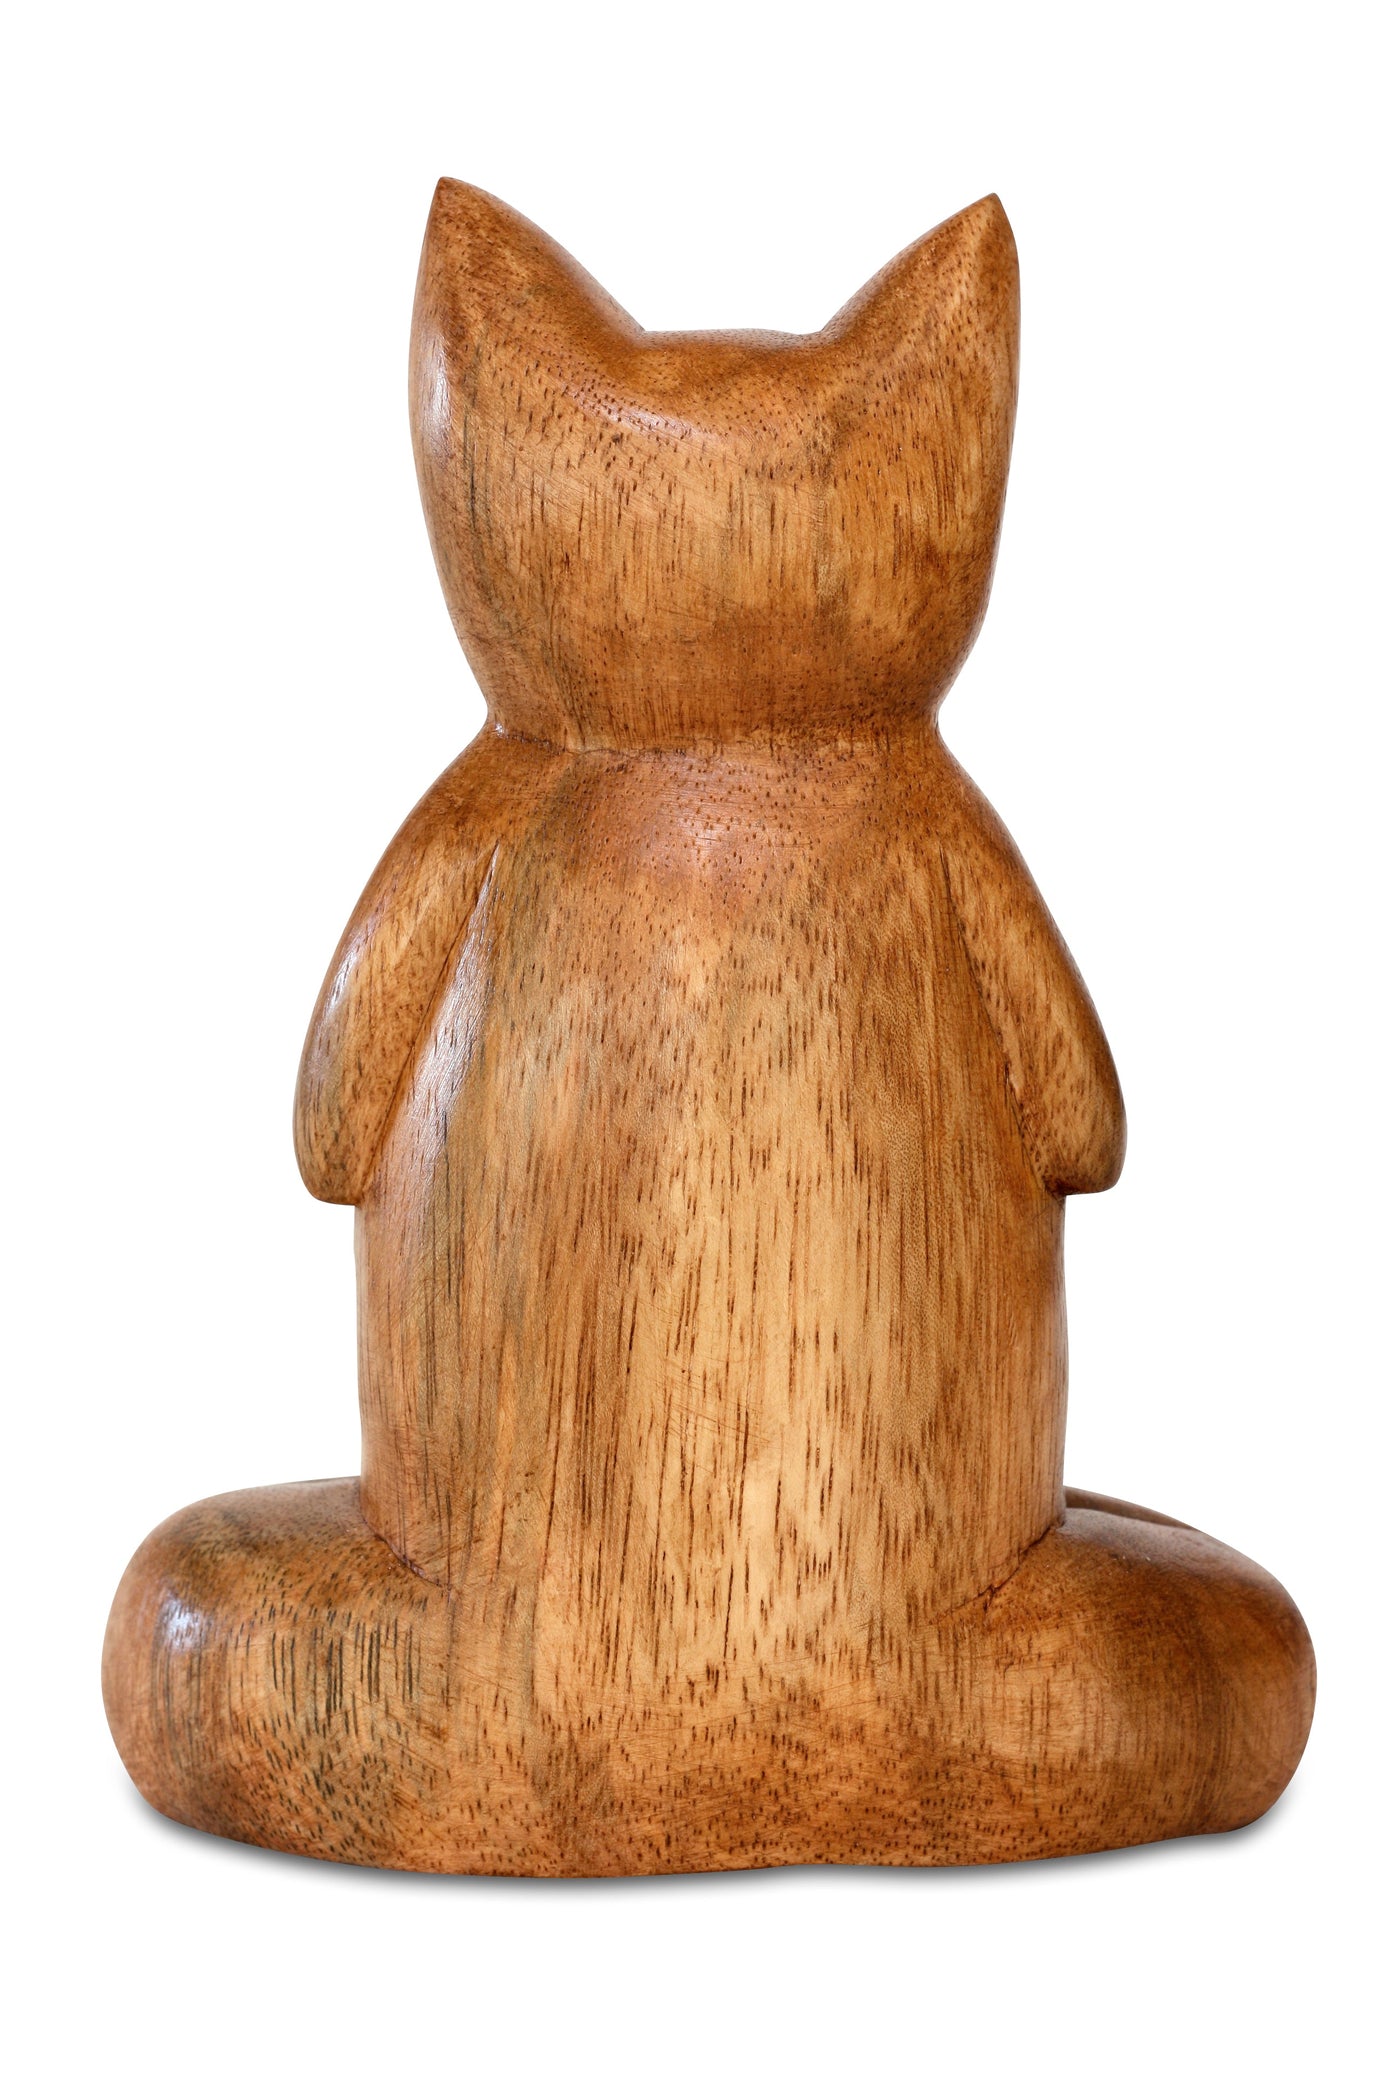 8" Wooden Handmade Hand Carved Yoga Fire Log Pose Cat Sculpture Statue Home Decor